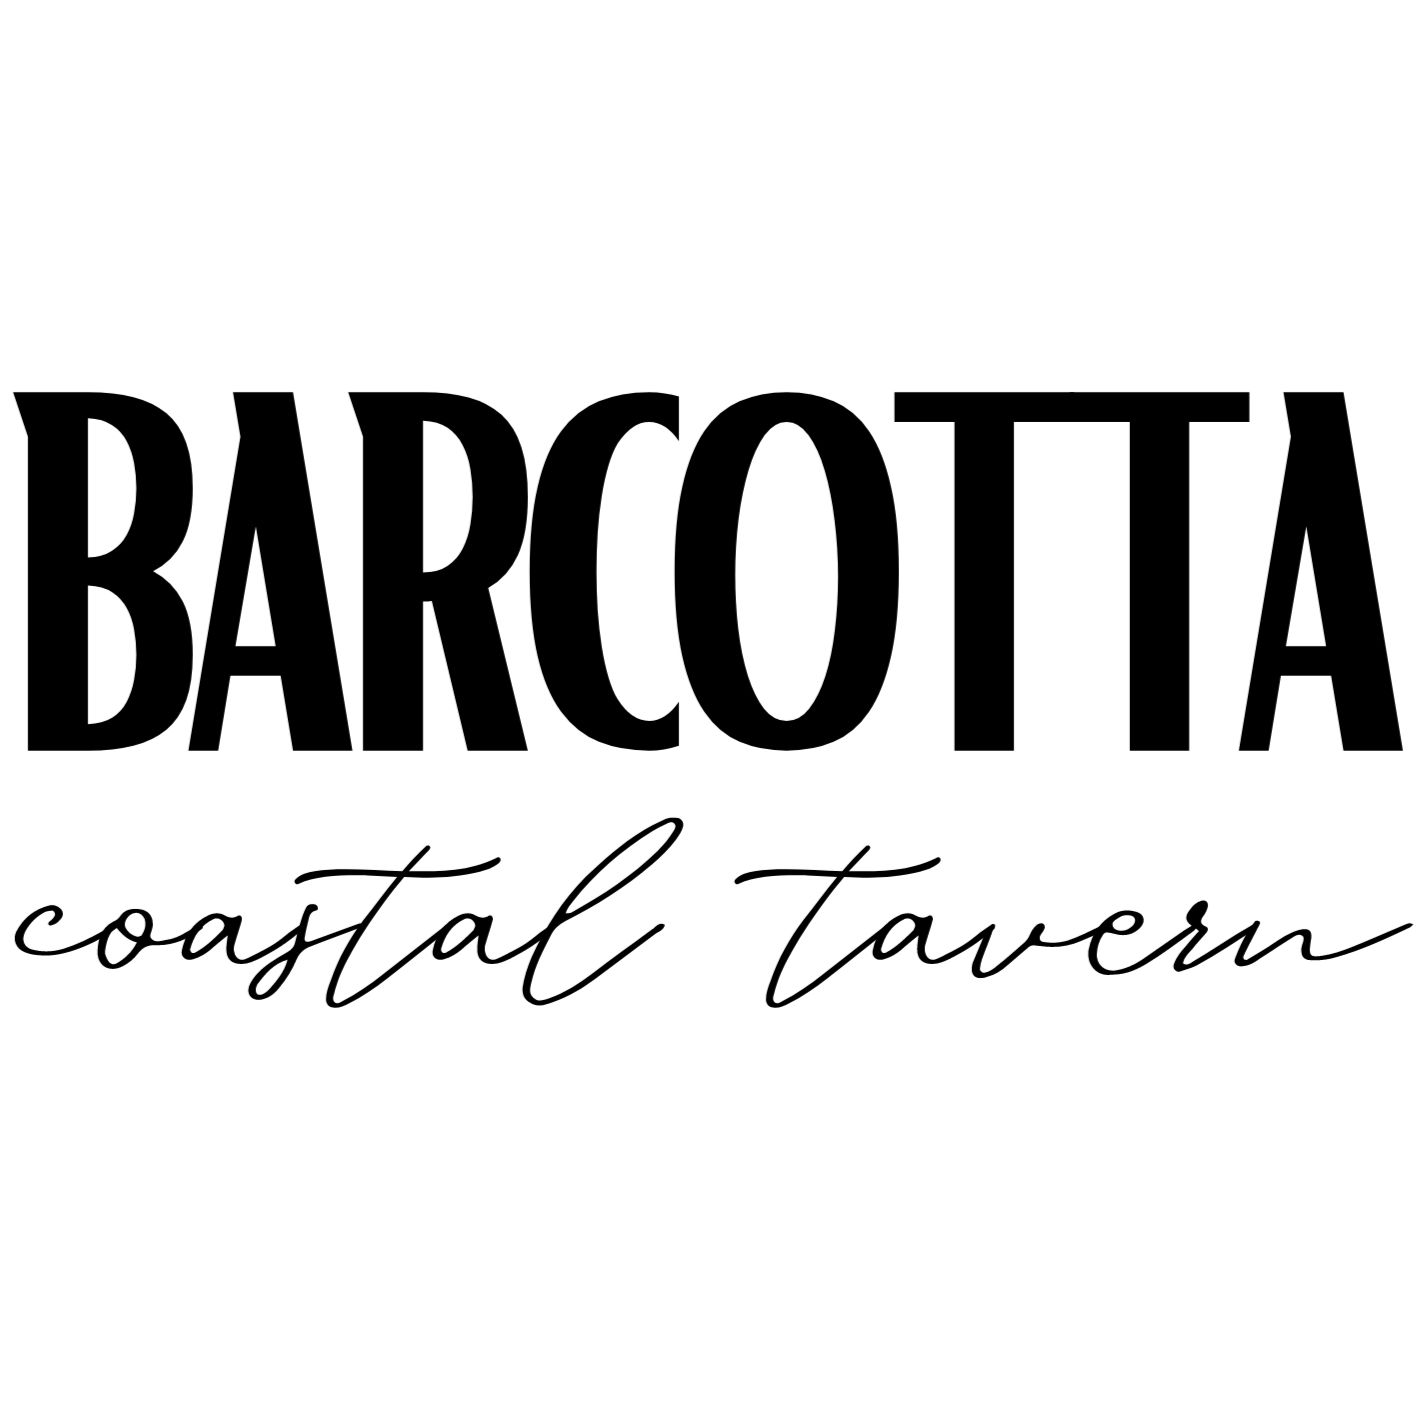 Barcotta Coastal Tavern